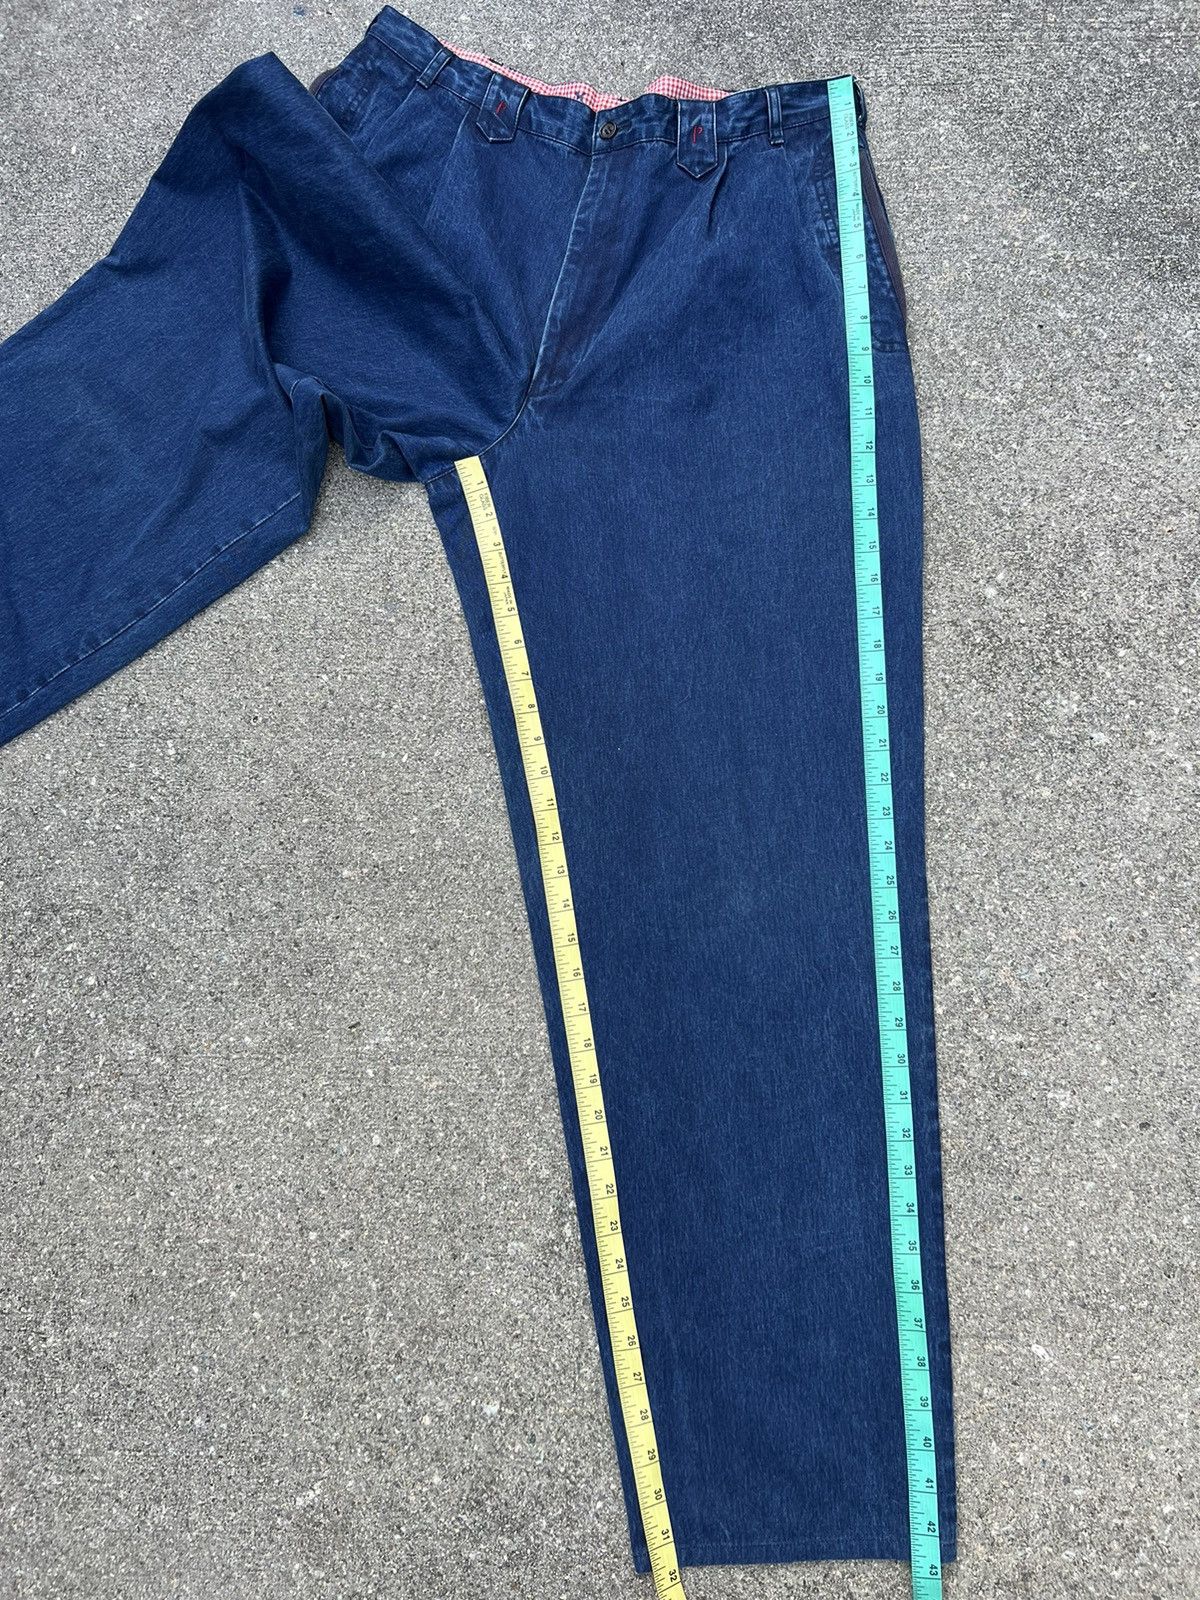 Orslow Vintage Papas Japan Sun Faded Indigo Blue Baggy Chinos Pant Size US 34 / EU 50 - 4 Thumbnail